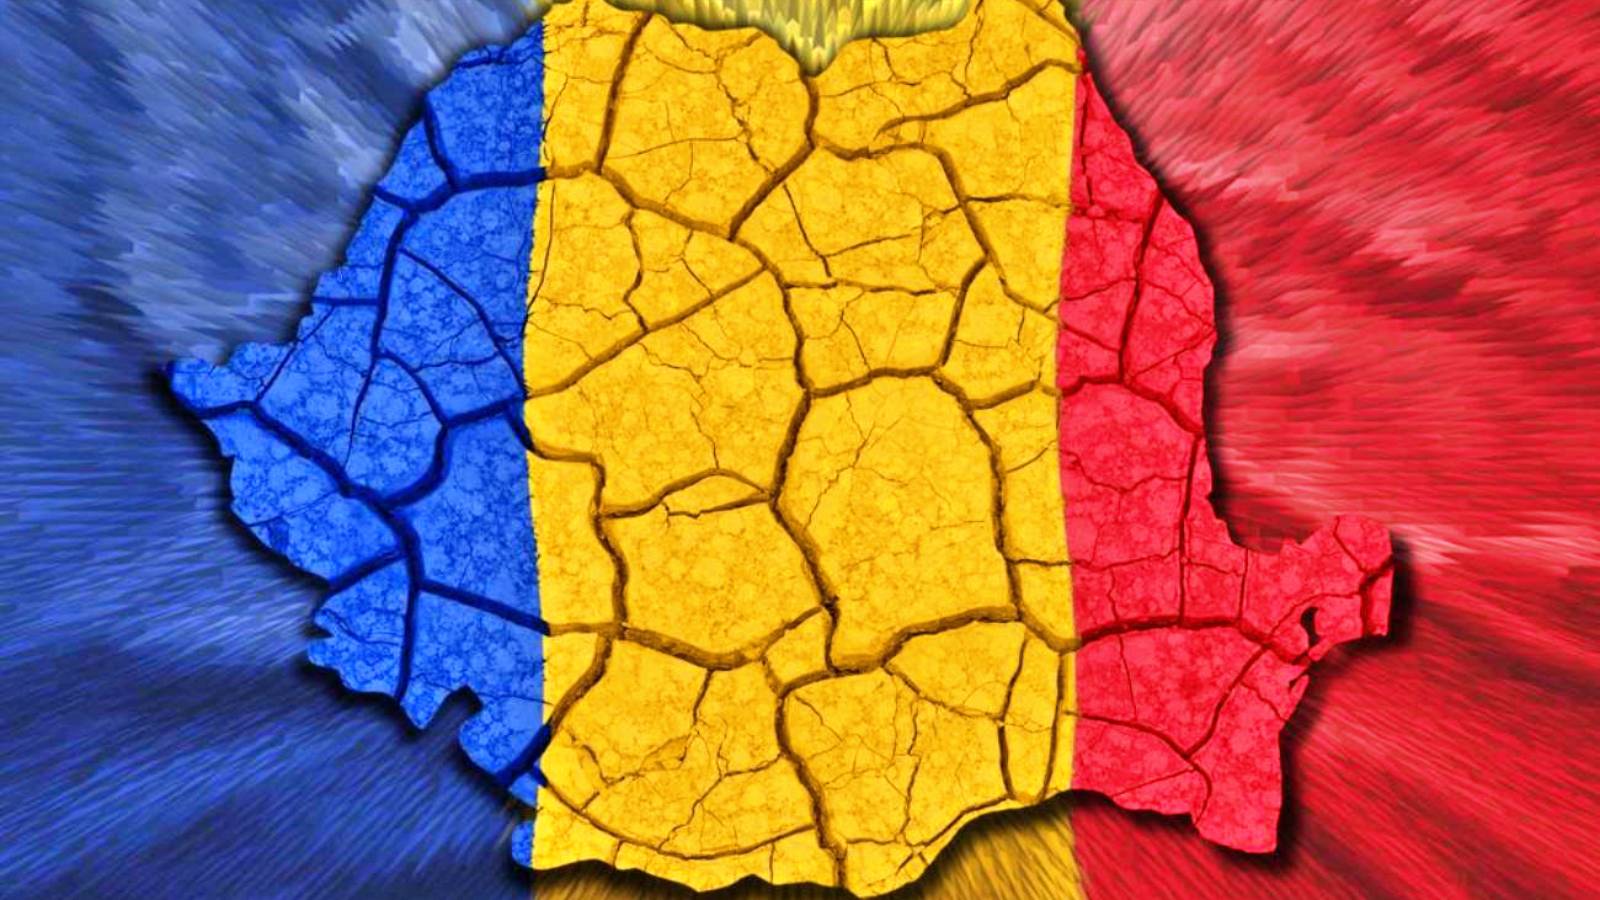 Romania Evolutia Infectarilor fiecare Judet Tara 6 Decembrie 2021